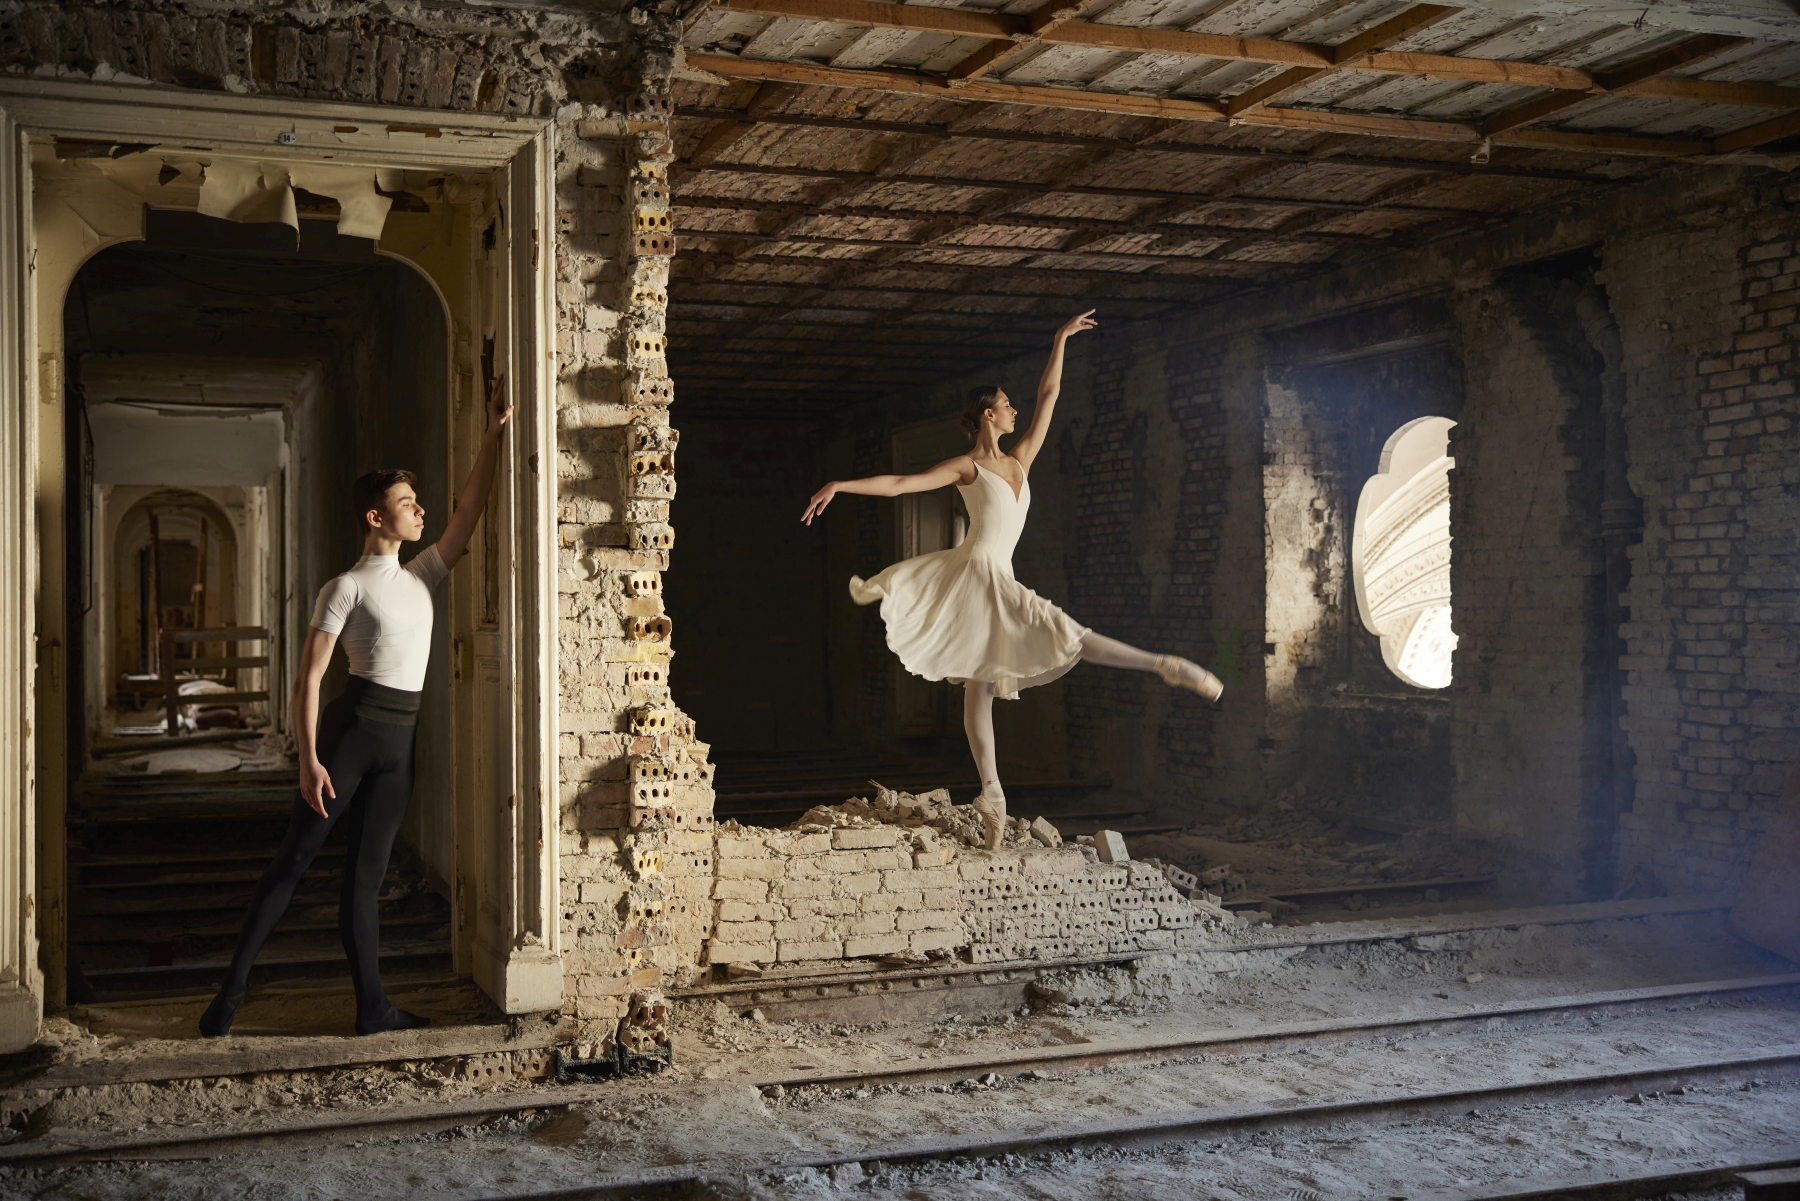 New exhibition recalls scenes from former ballet institute 